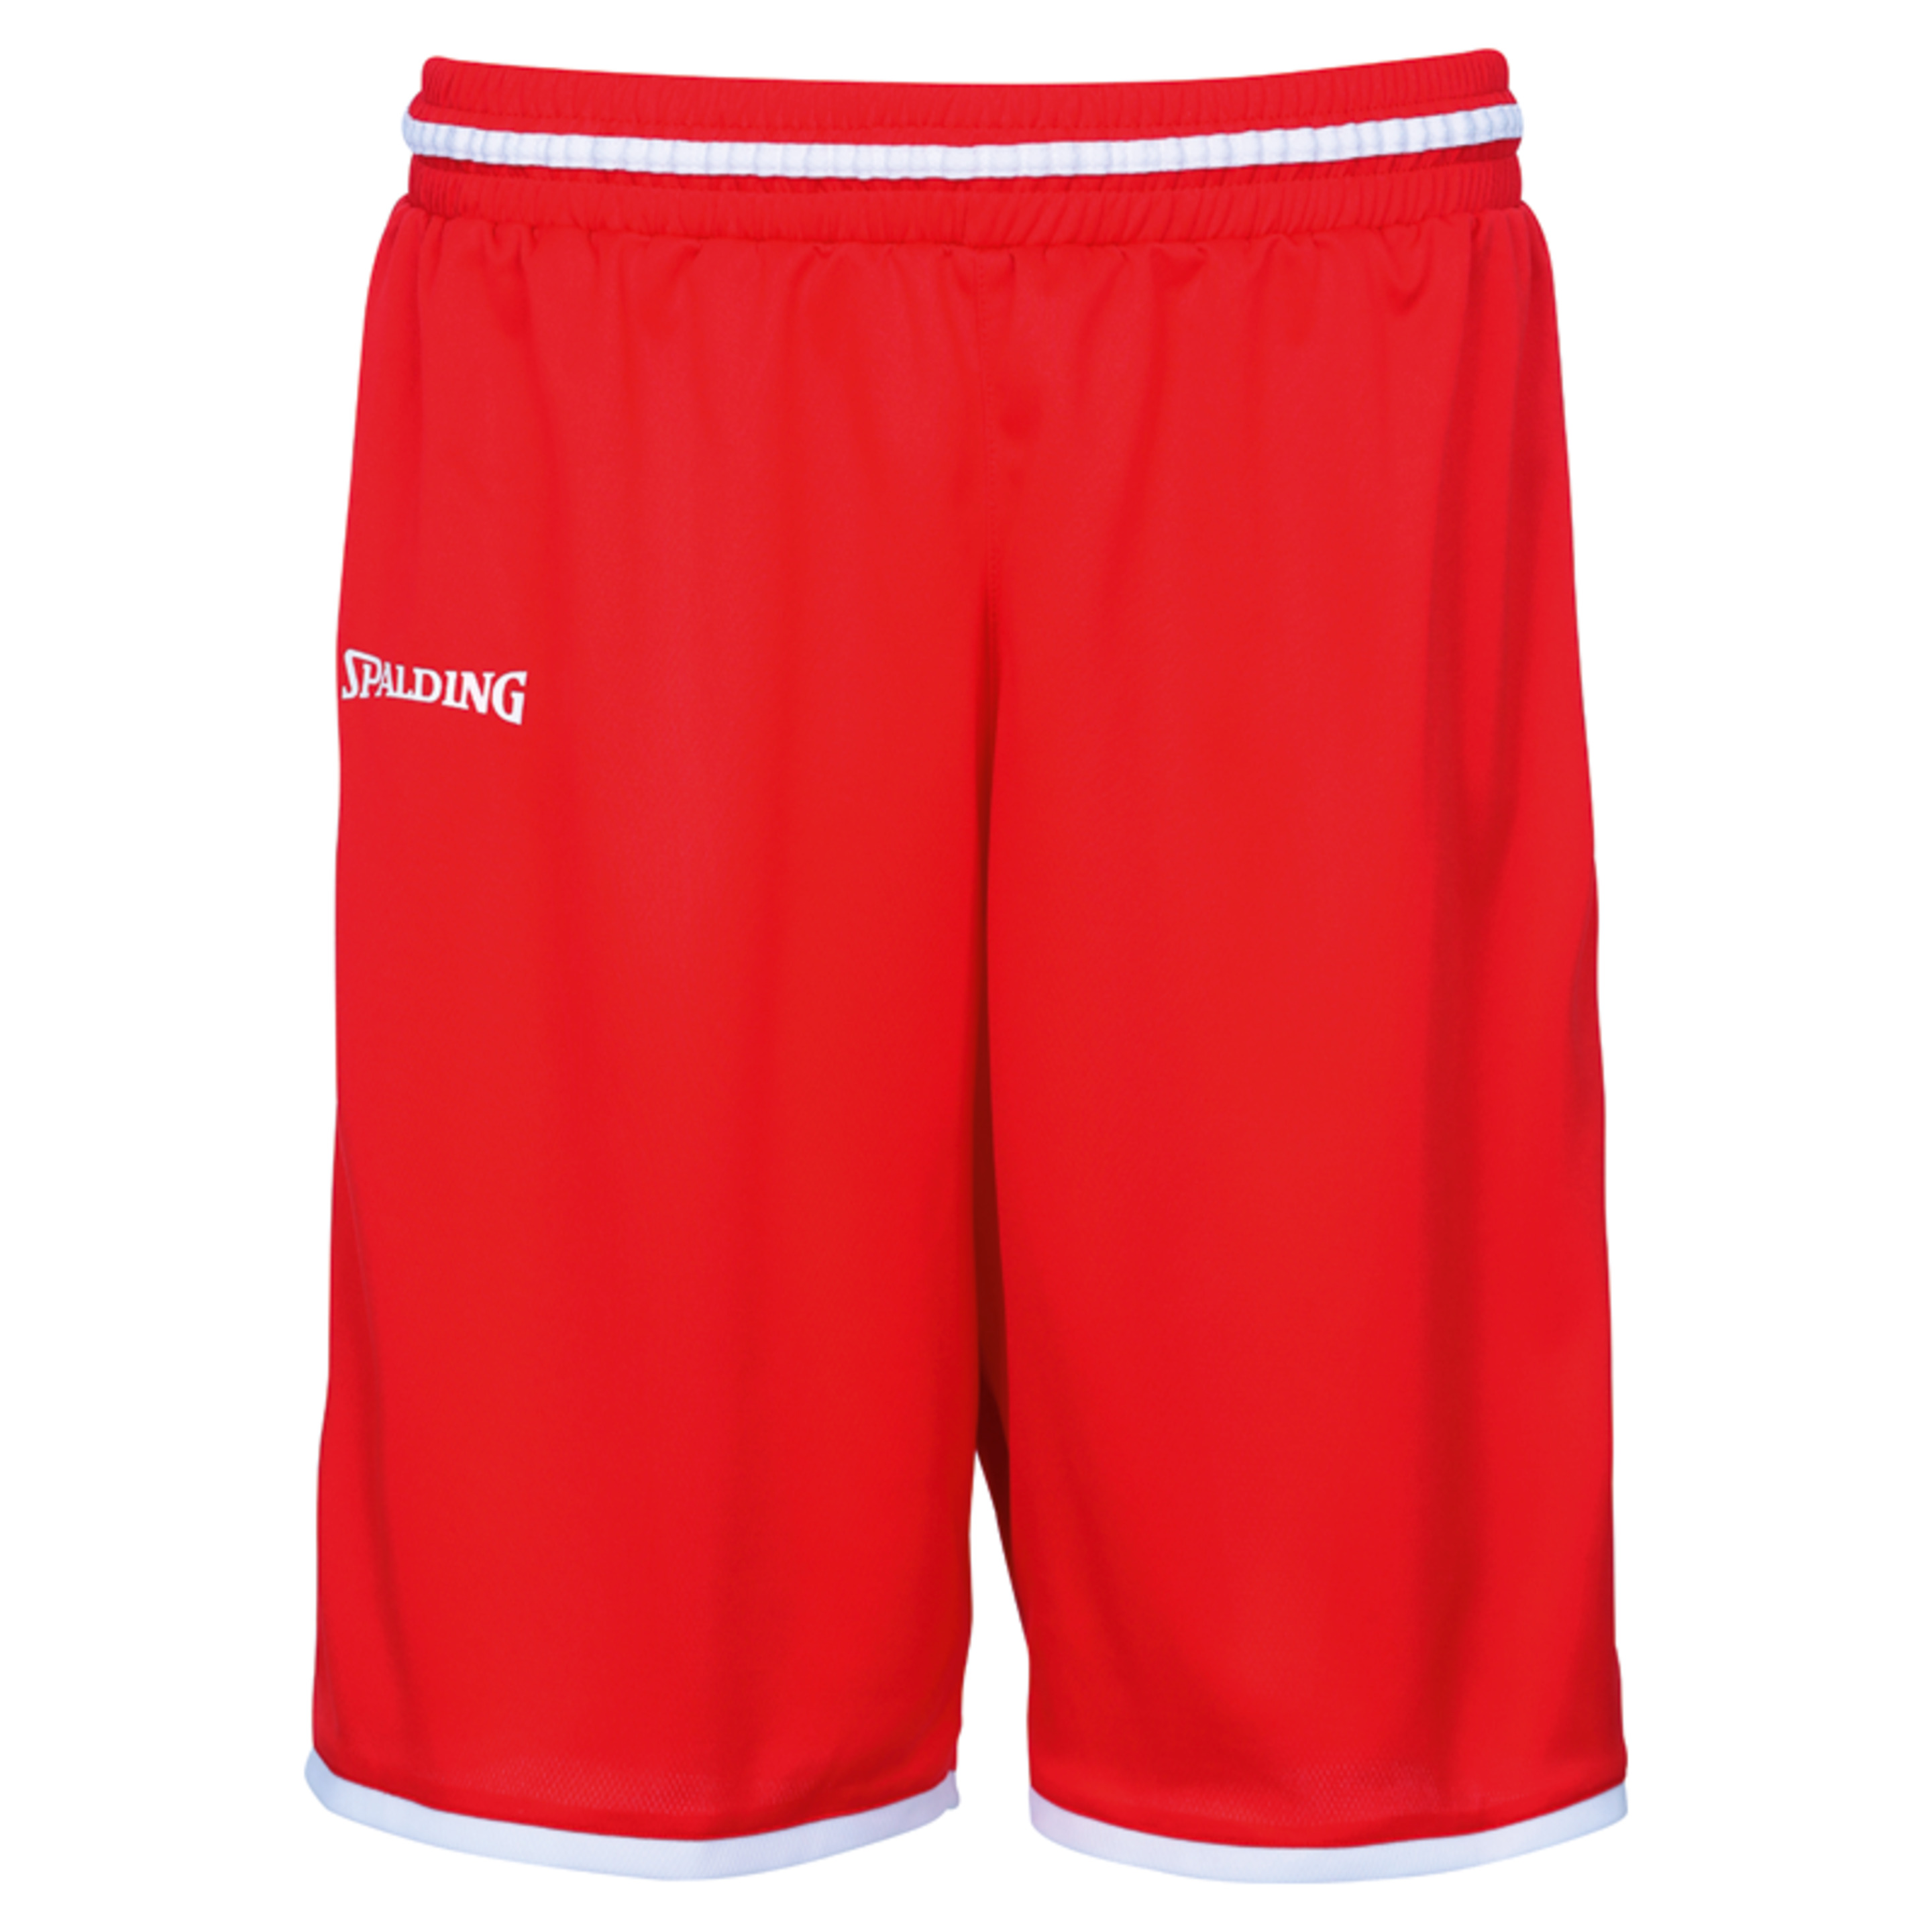 Move Shorts Rojo/blanco Spalding